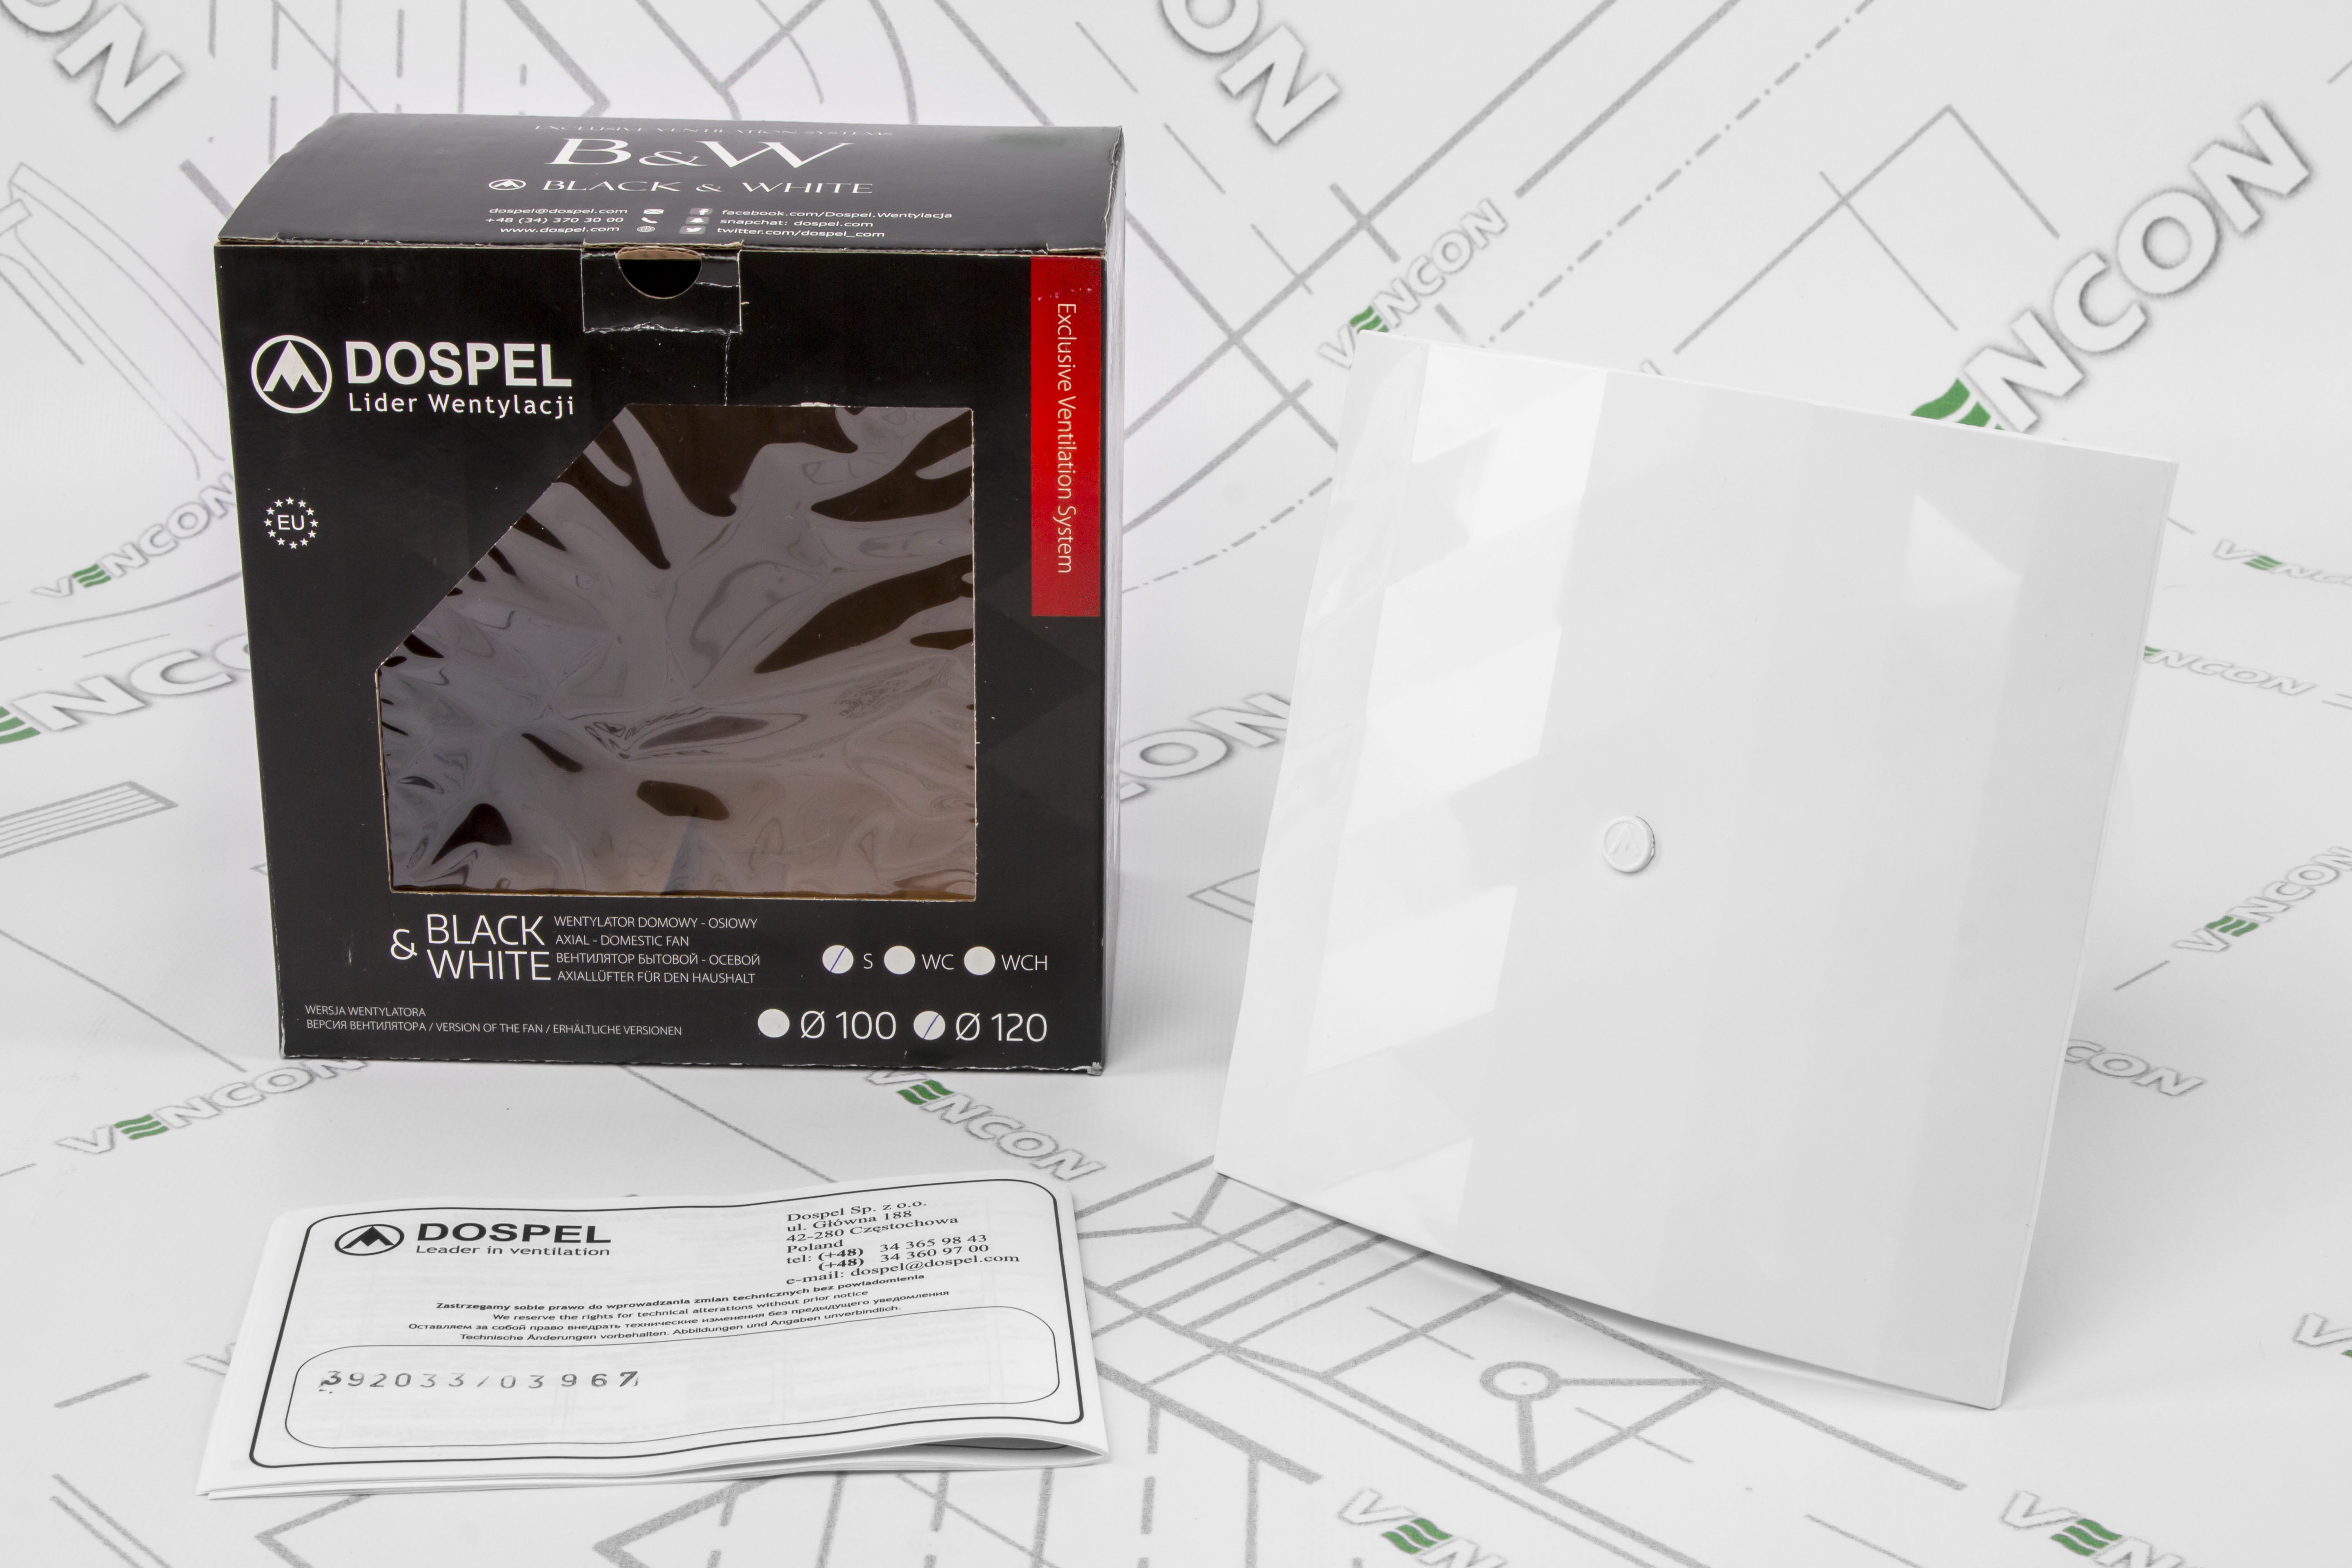 Вытяжной вентилятор Dospel Black&White 120 S White характеристики - фотография 7